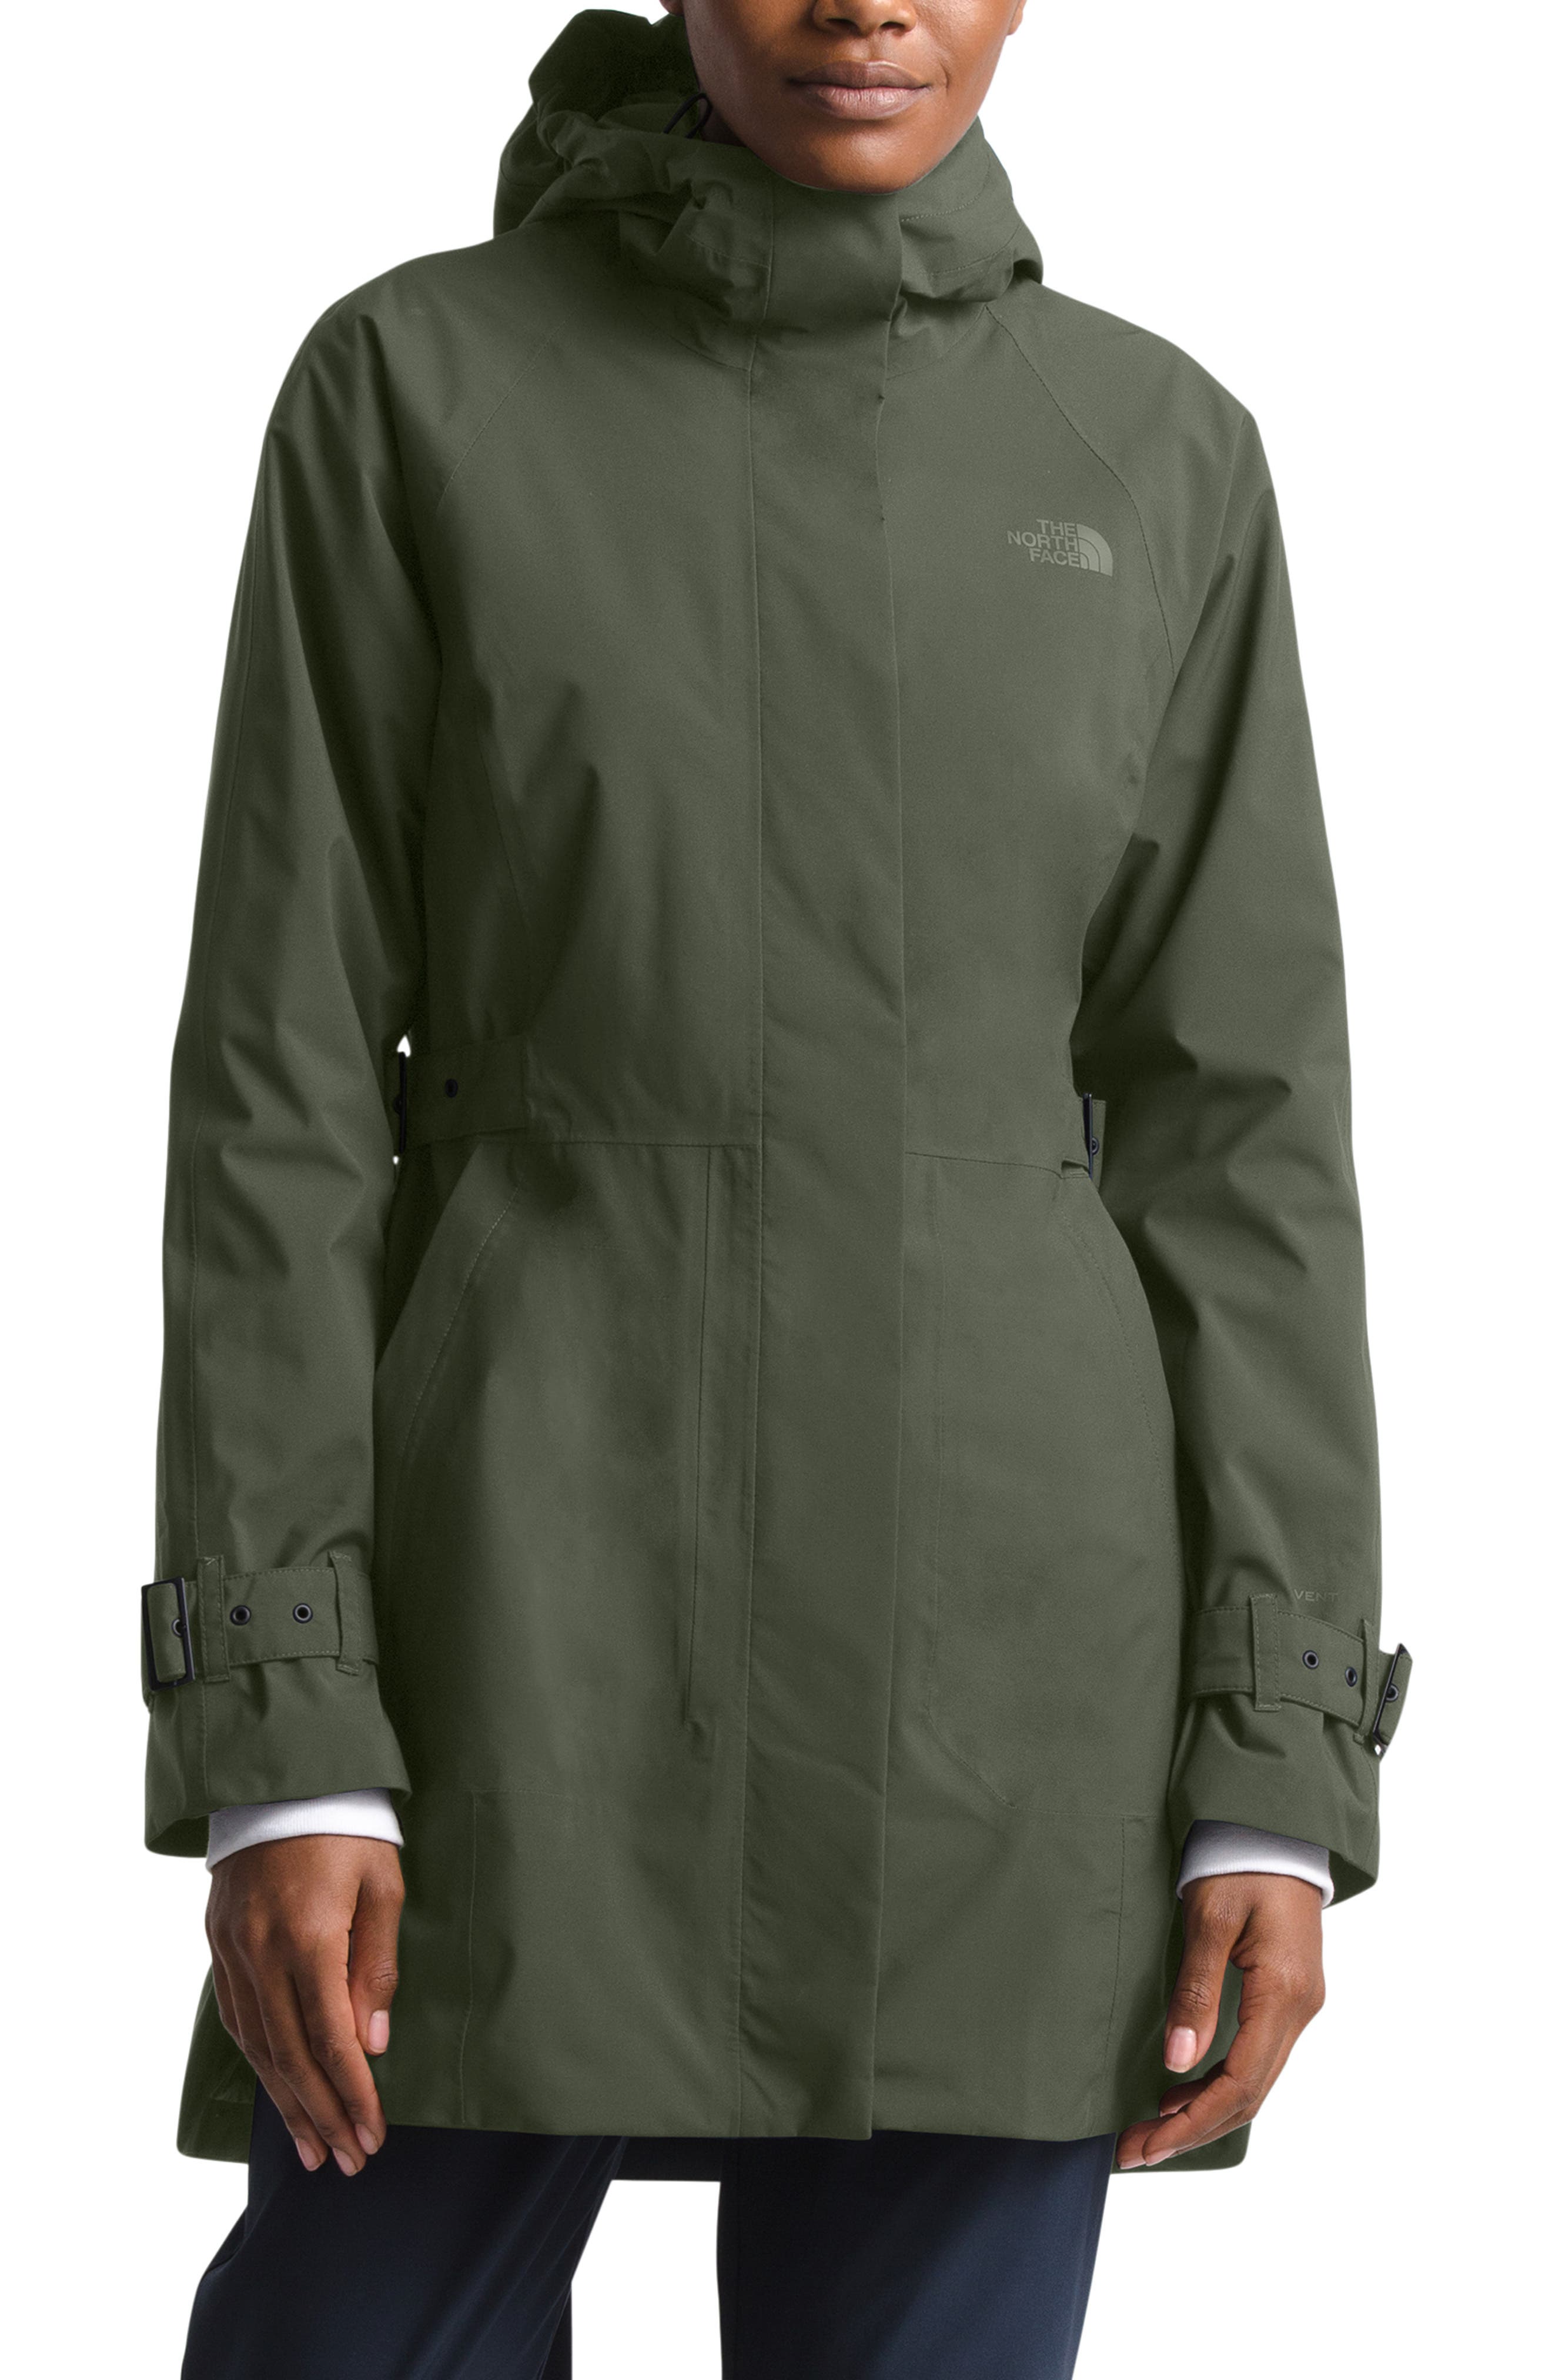 waterproof jacket womens sale